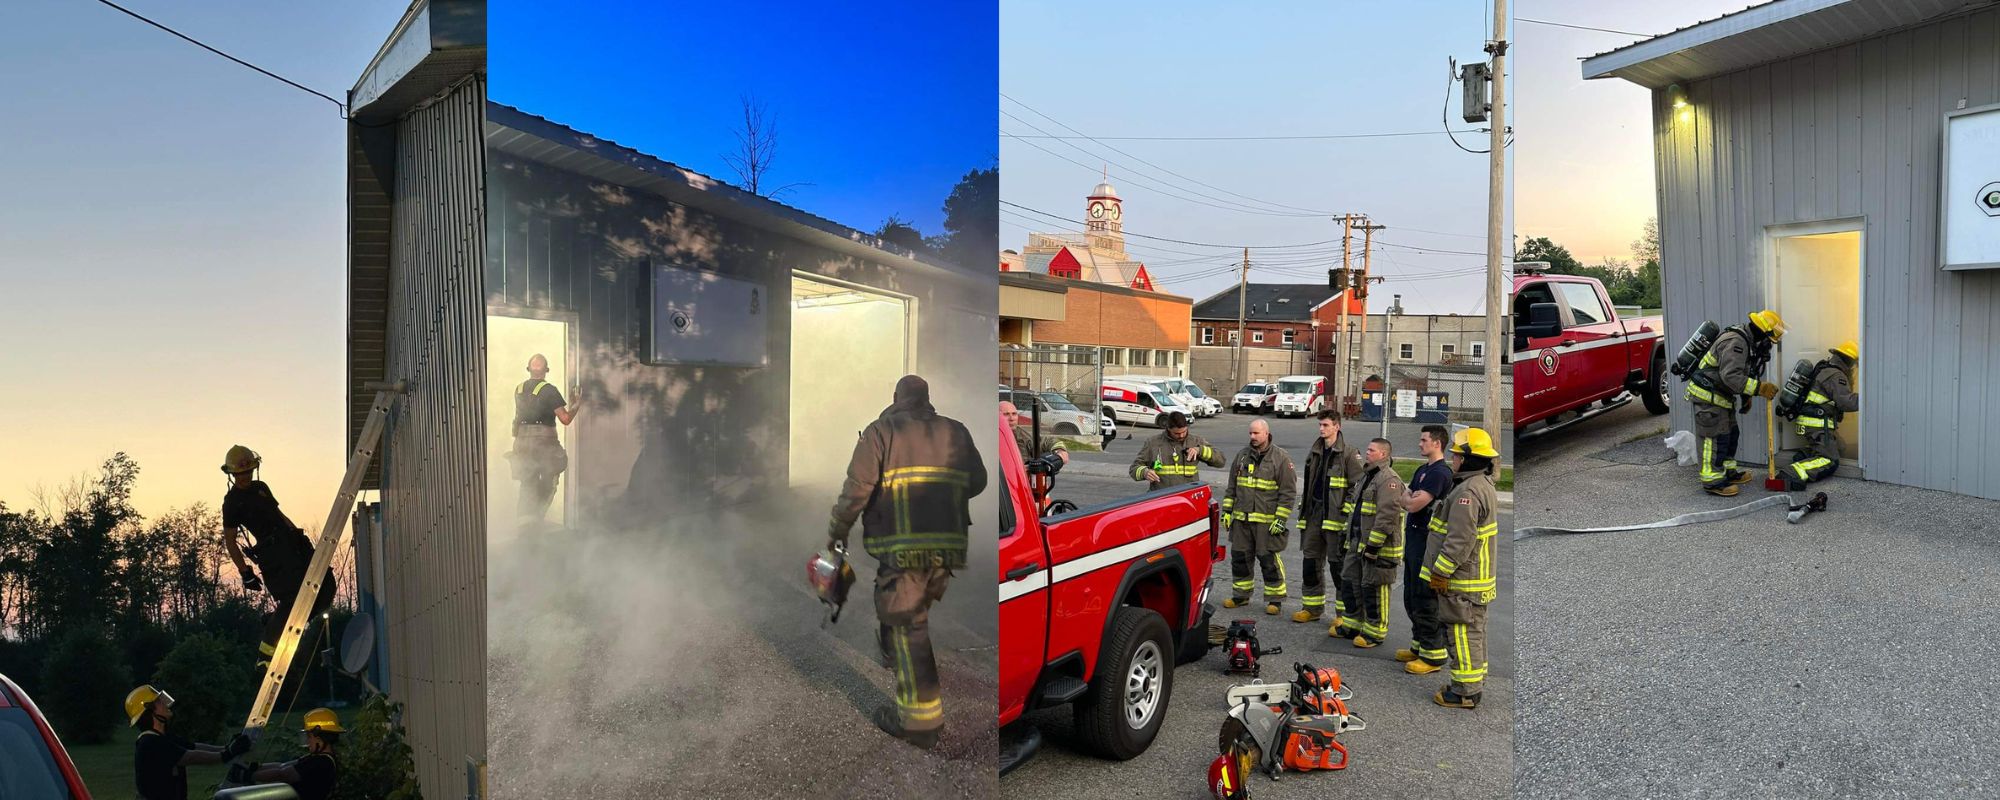 Volunteer Firefighter images